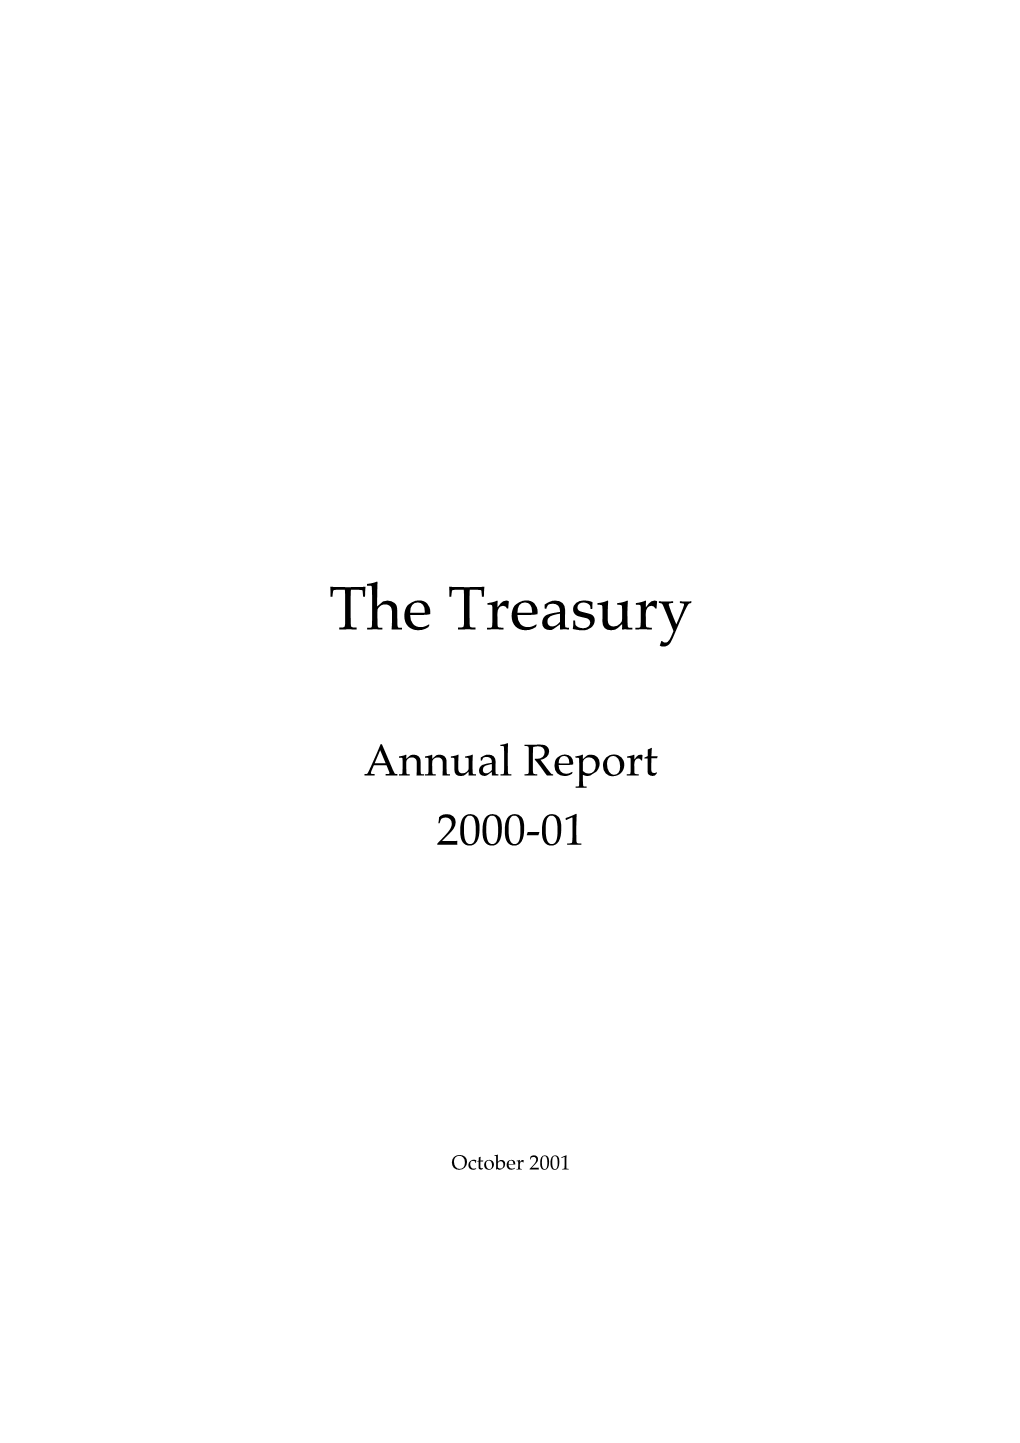 Annual Report 2000-01